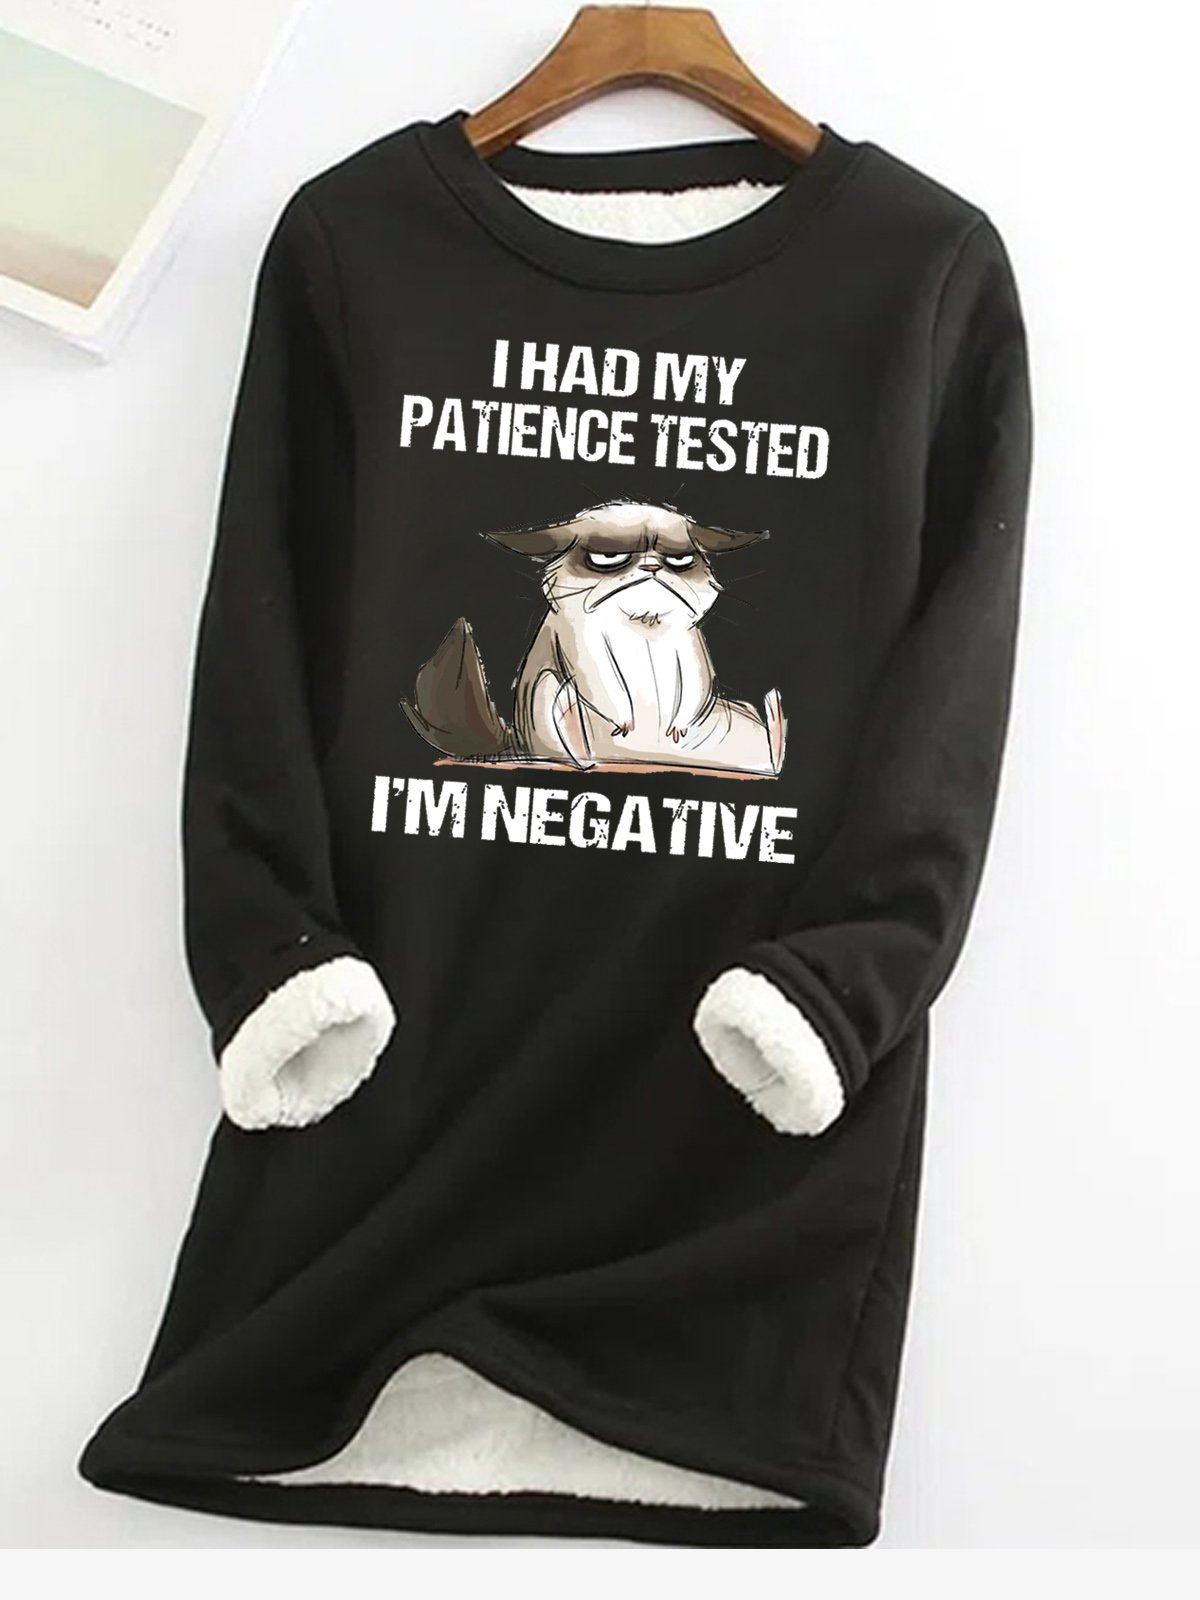 Women's Funny I Had My Patience Test Grumpy Cat Animal Crew Neck Sweatshirt